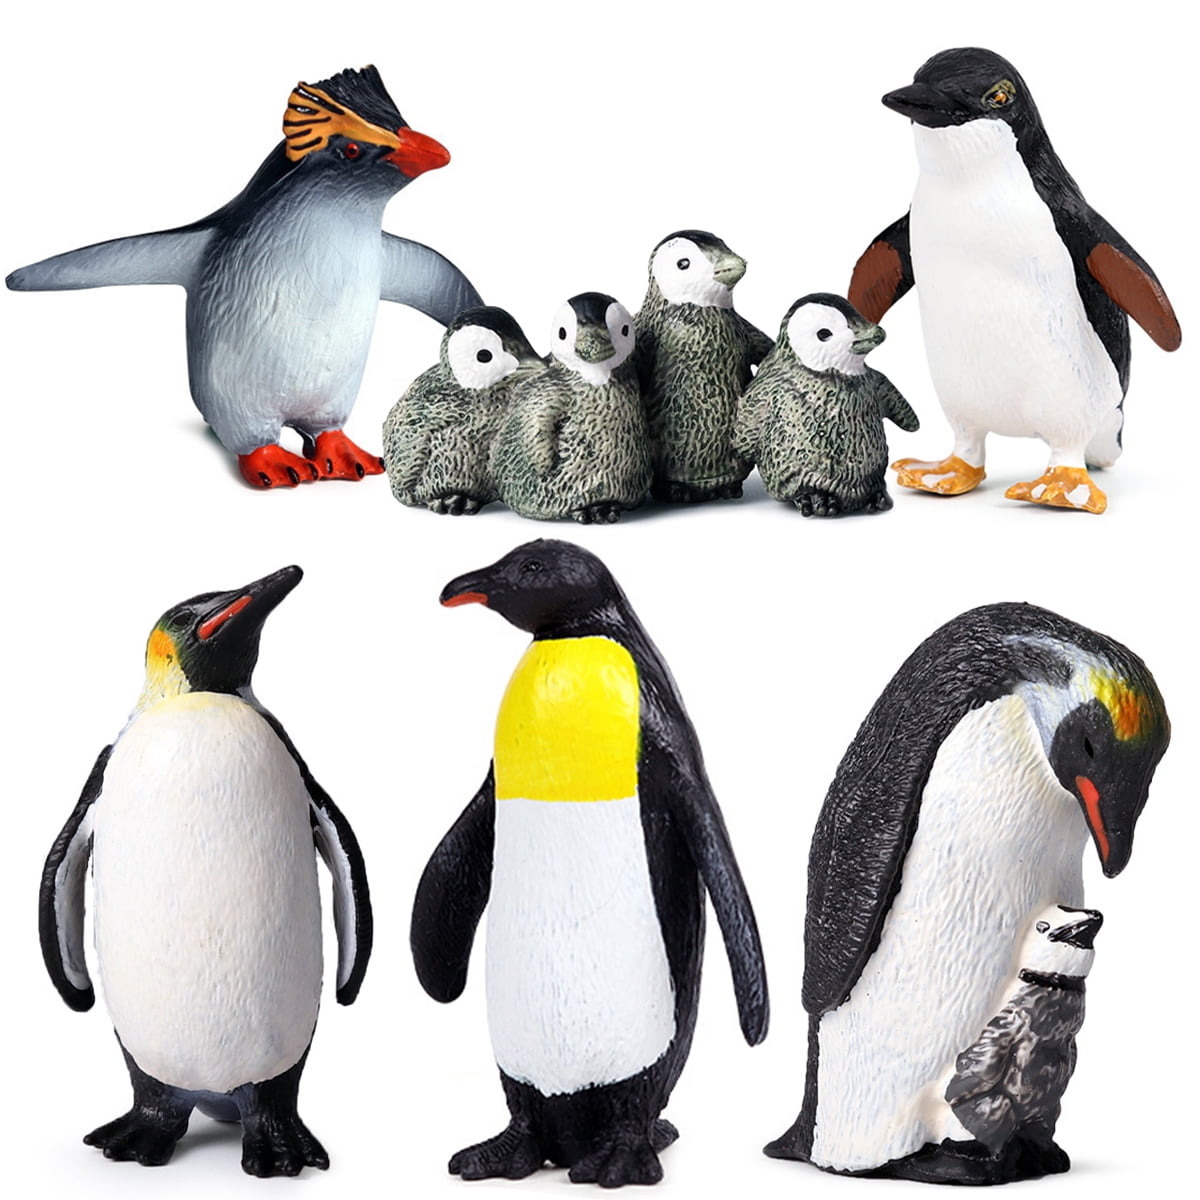 Safari Ltd Penguin Toob With 11 Fun and Flightless Figurines B000rq59vm for sale online 